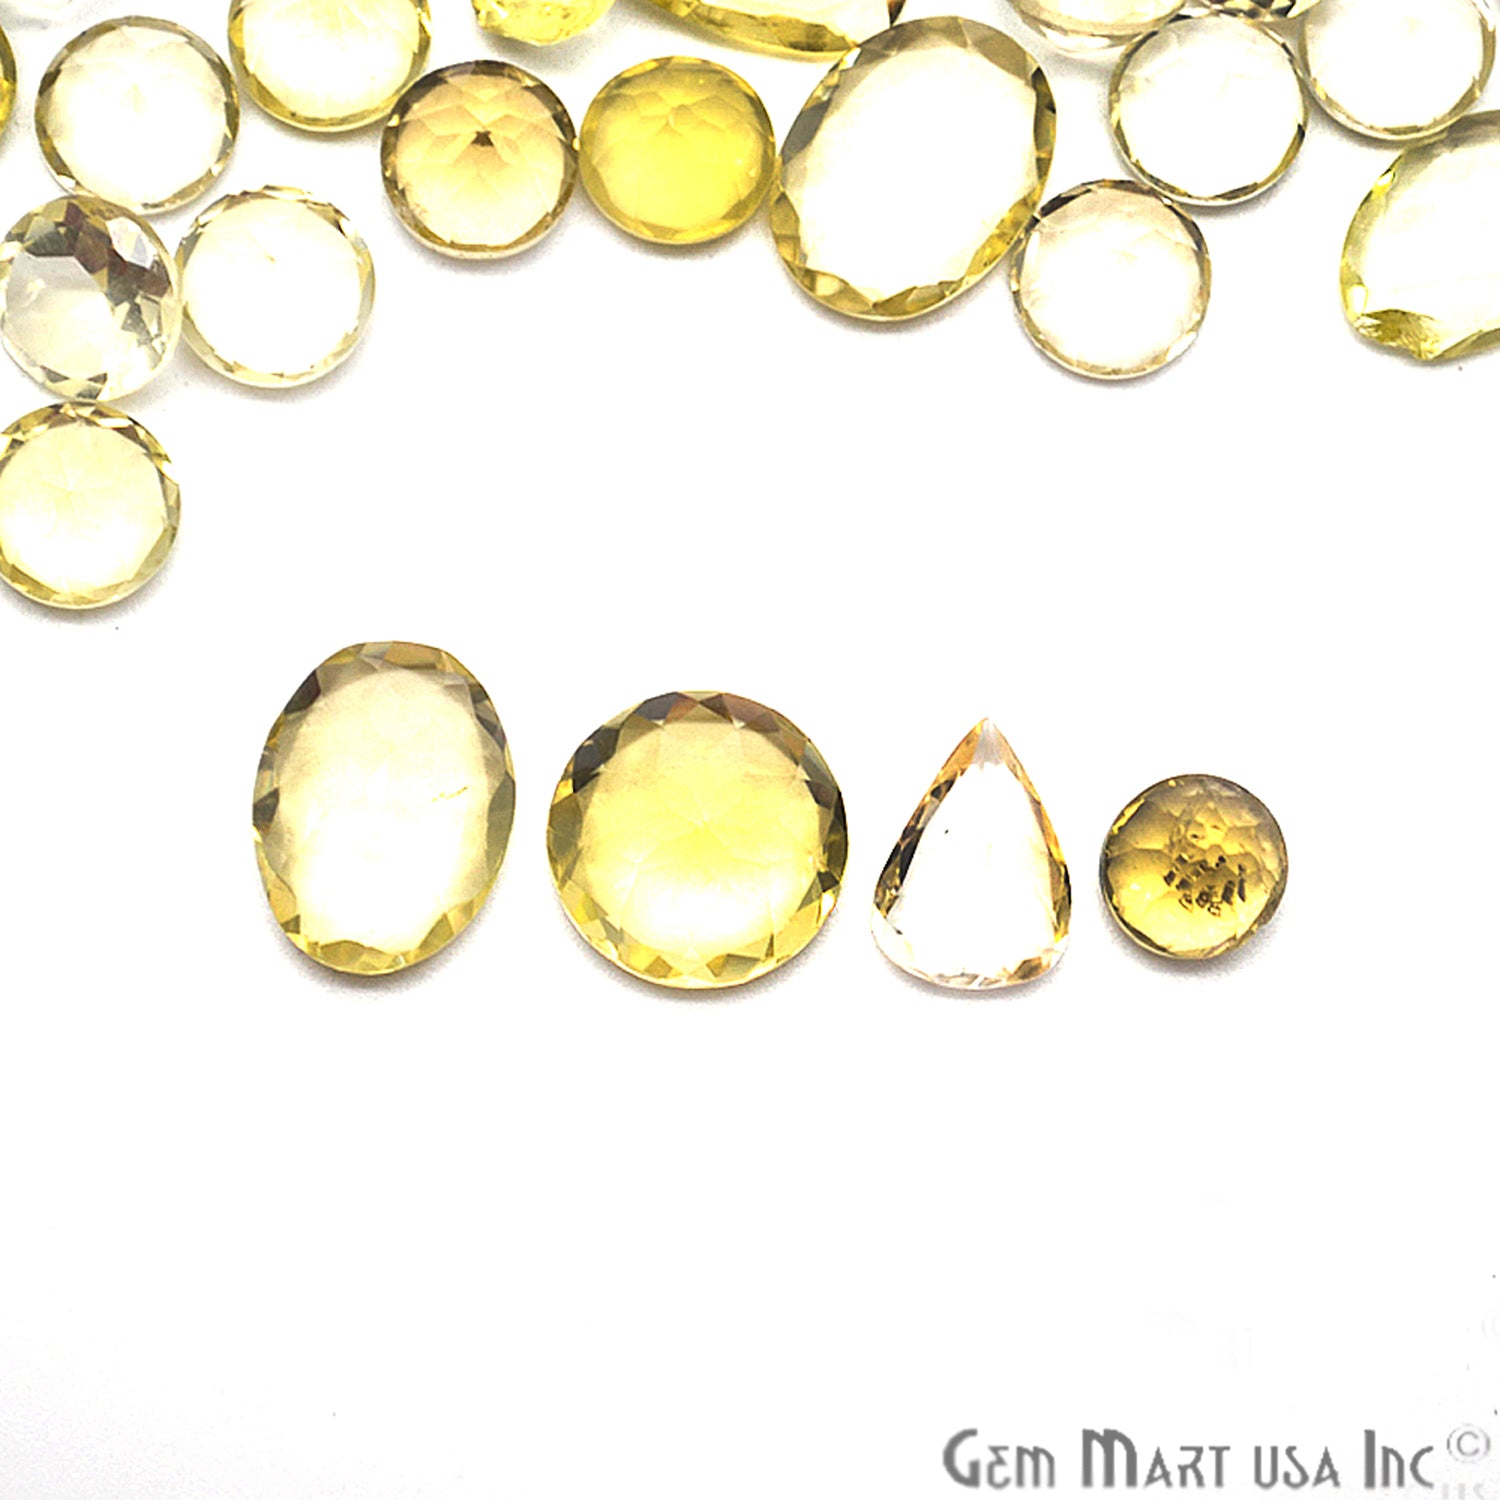 100cts Big Size Lemon Topaz Mix Shape Loose Gemstones - GemMartUSA